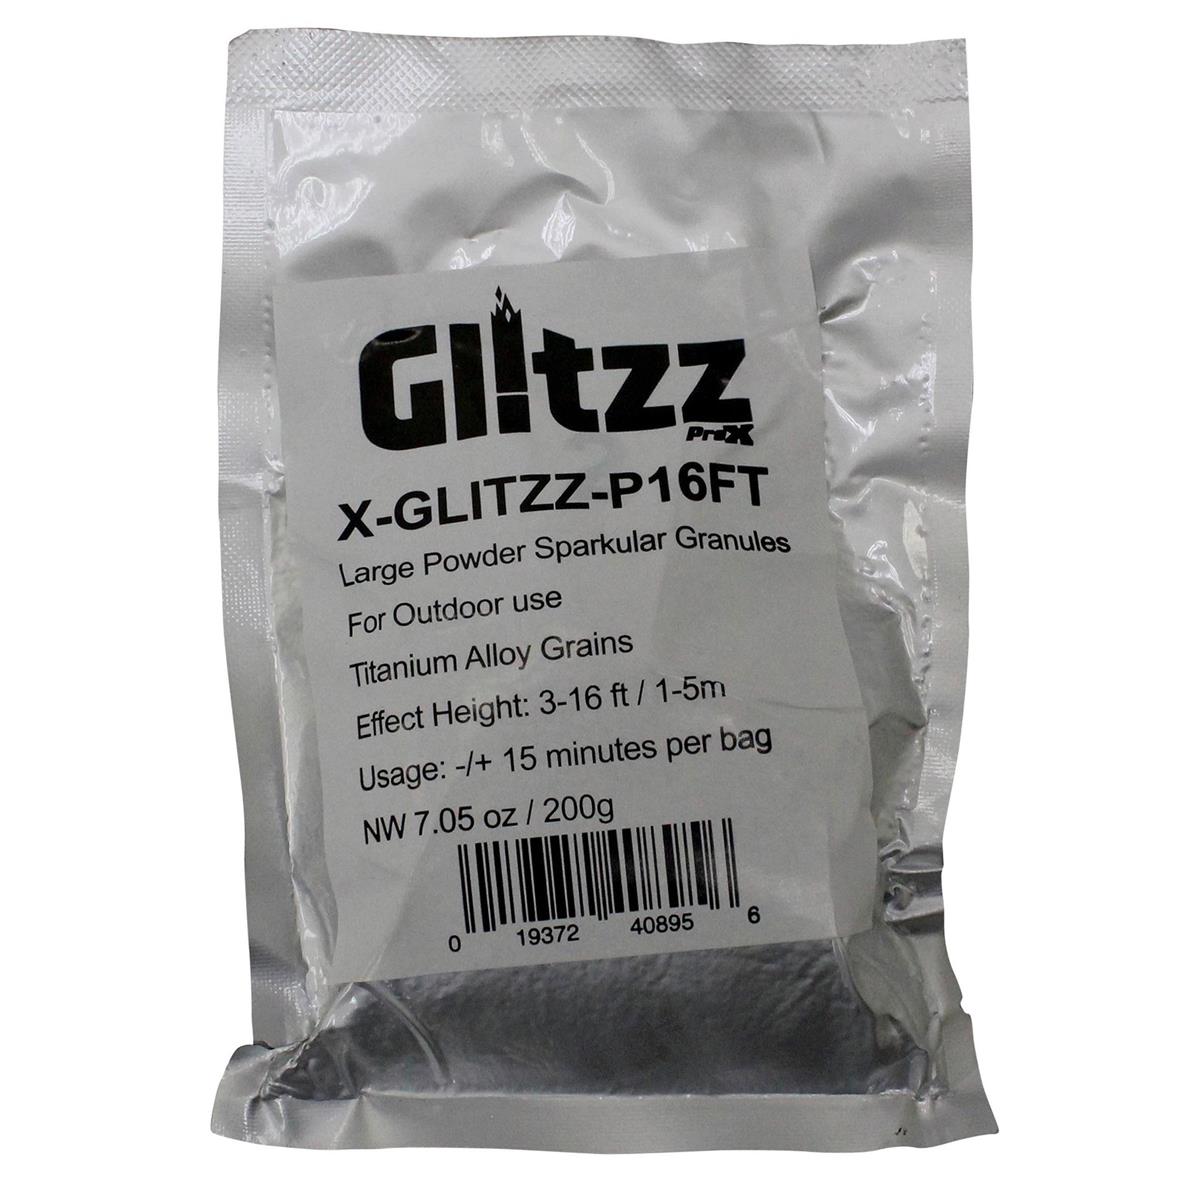 Image of ProX X-BLITZZ-P16FT 16' Blitzz Large Powder Cold Spark Effect Granules